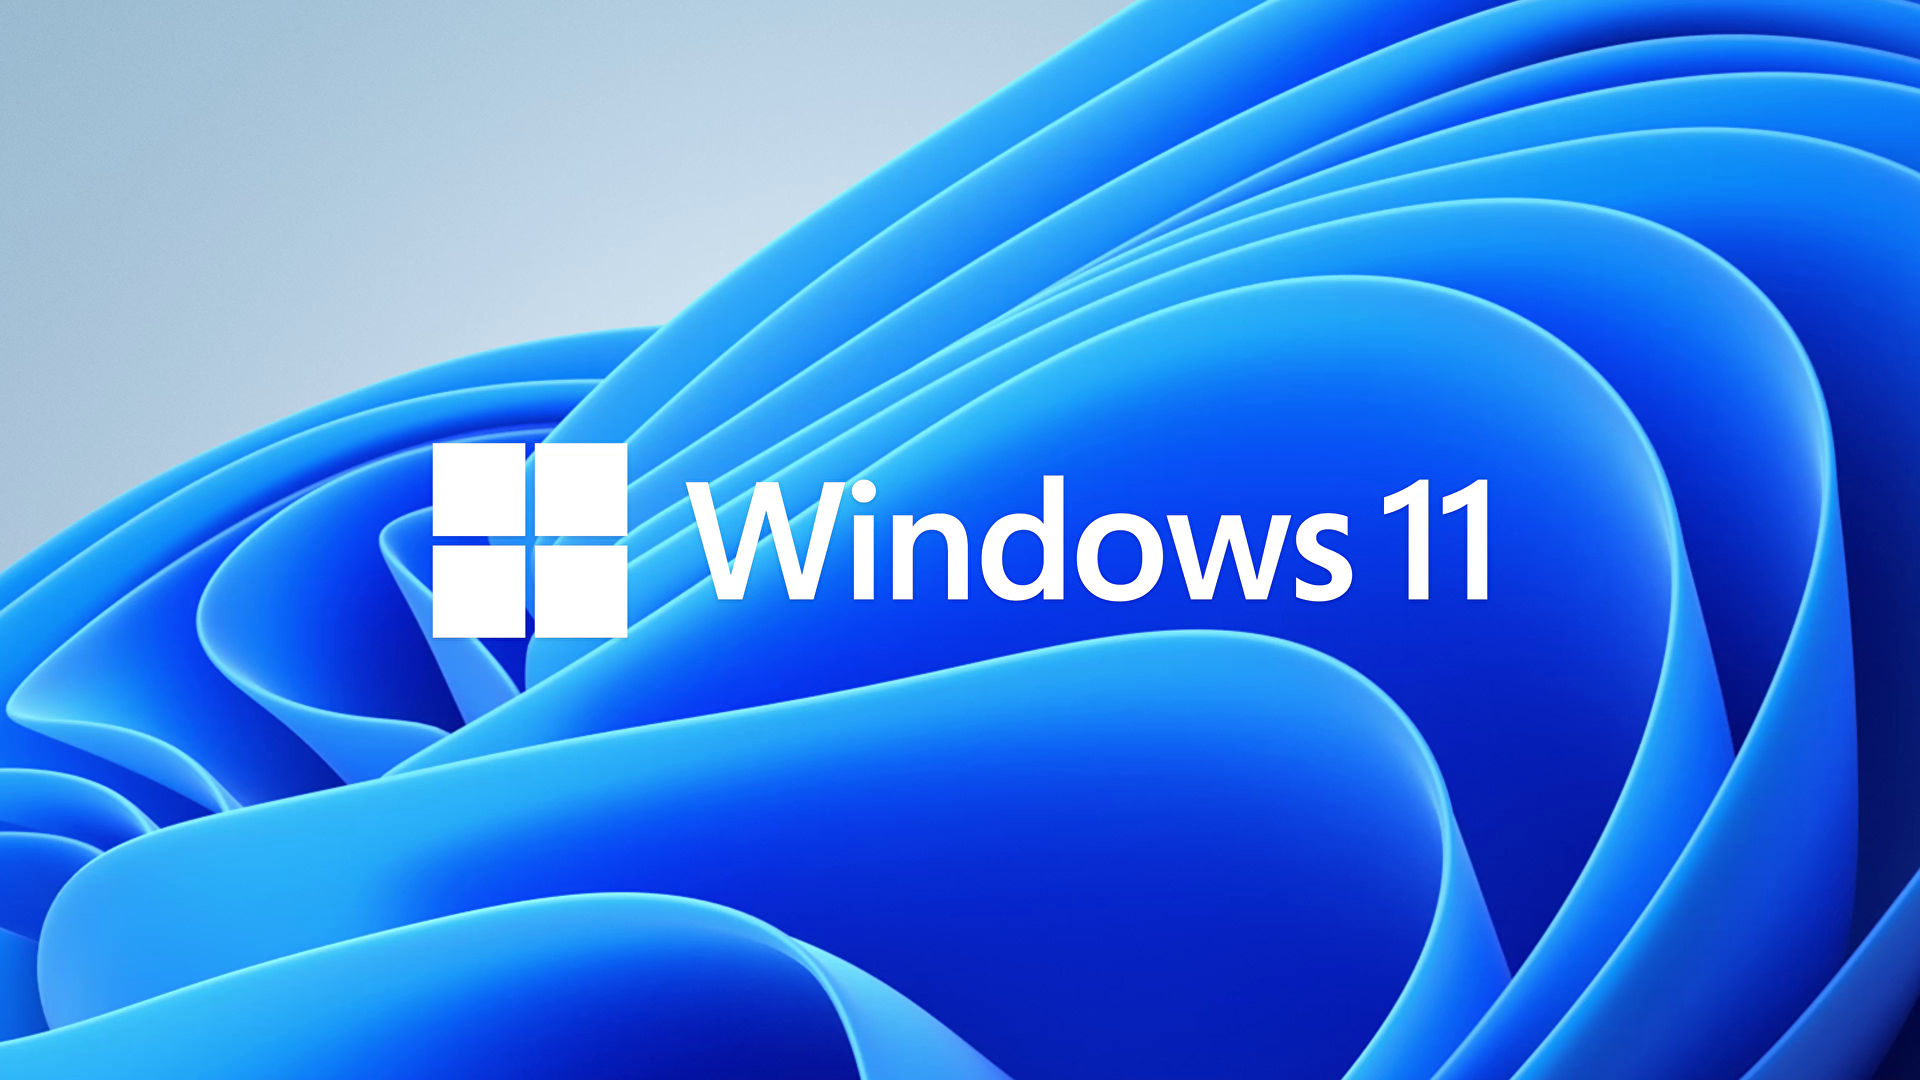 Maxprog software works on Microsoft Windows 11